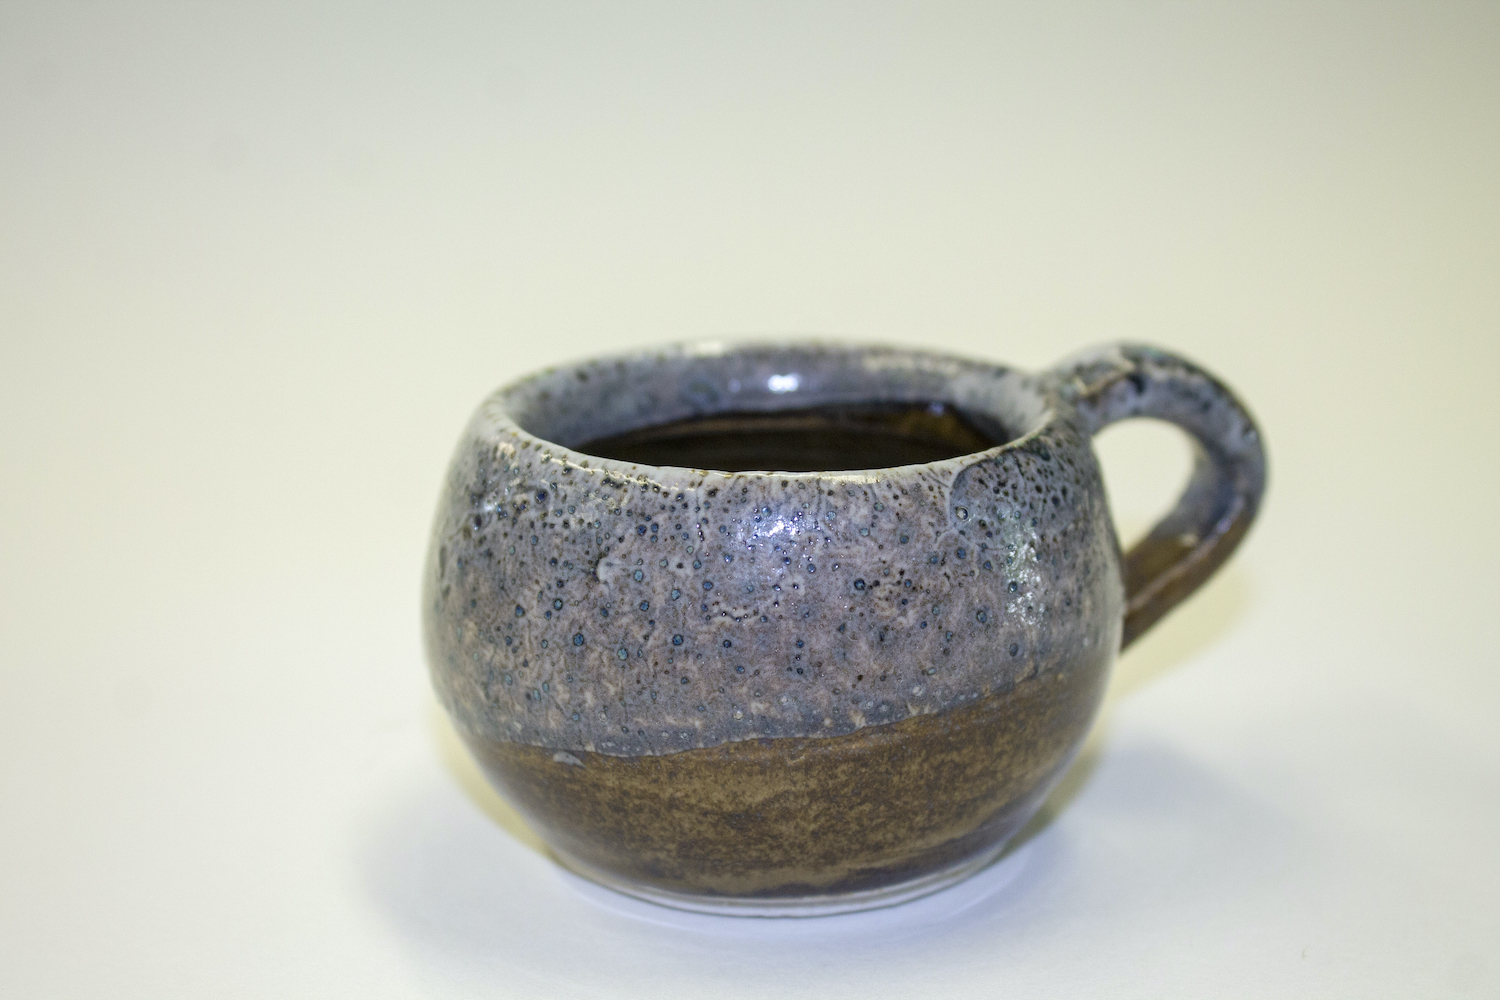 Ceramic mug with gray glaze